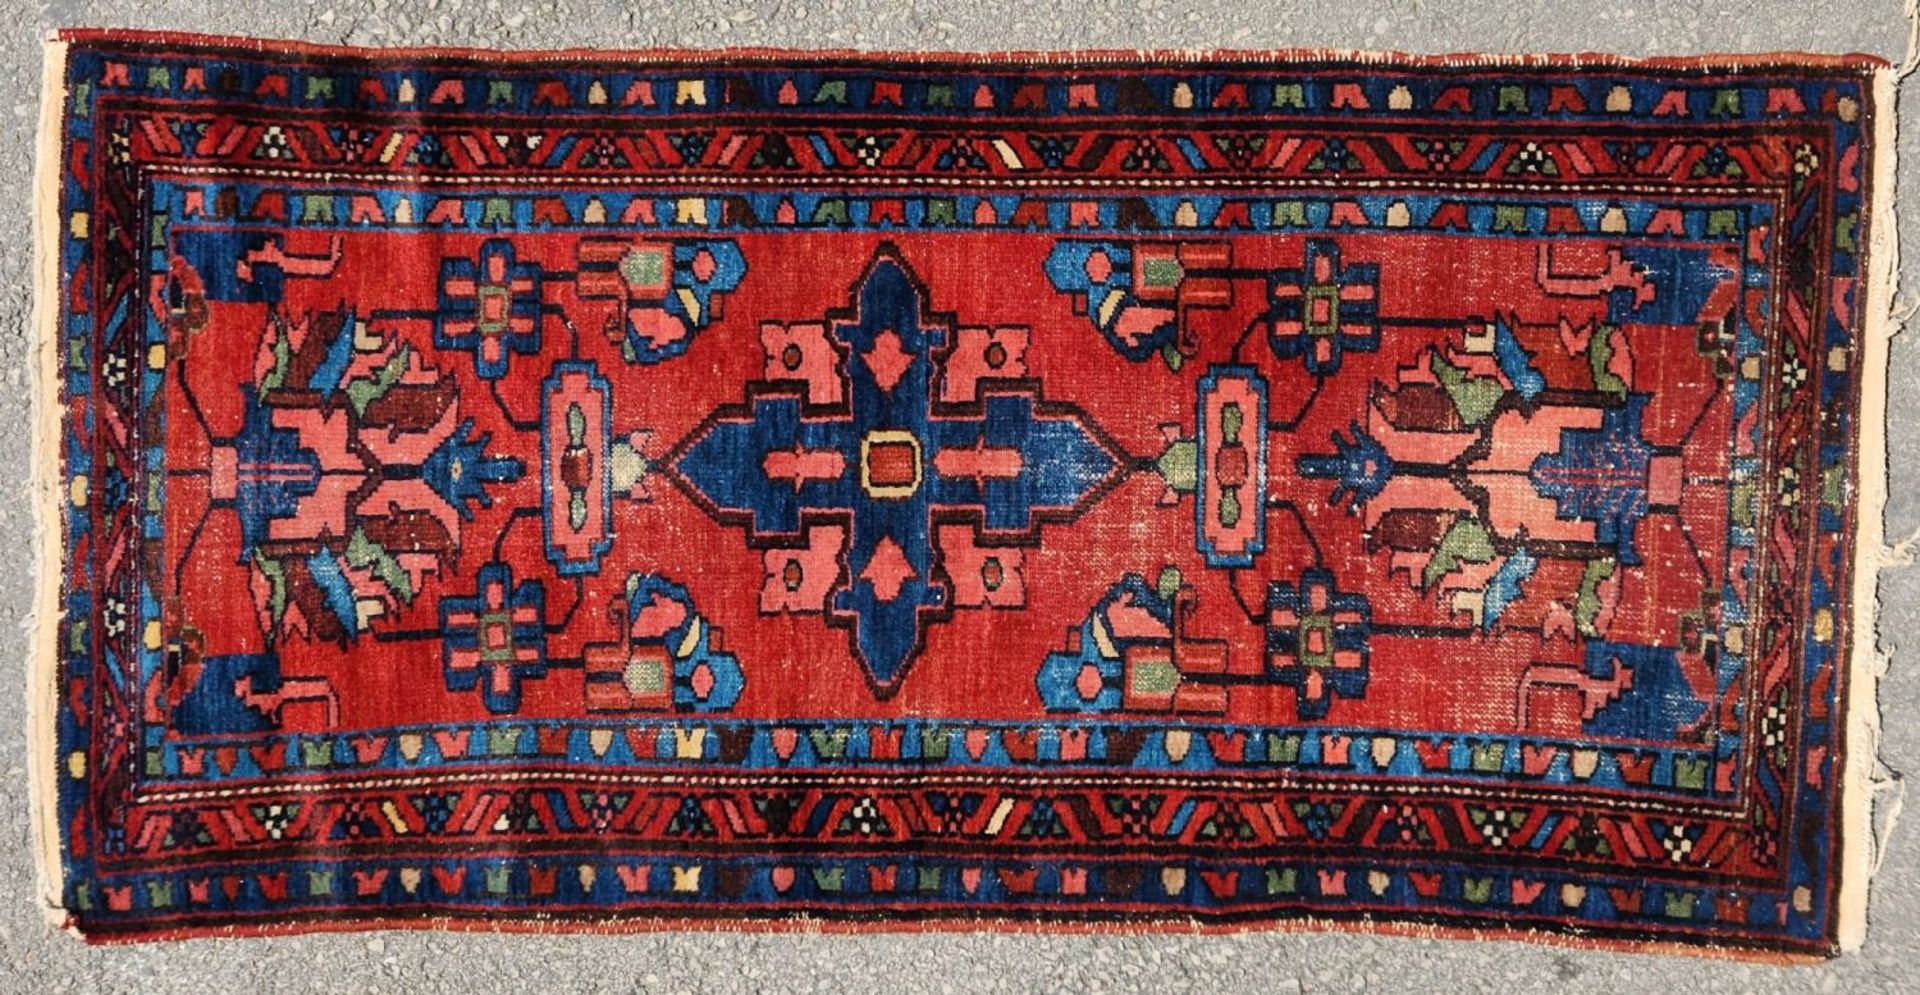 Handmade carpet, carpet size: 154X73 cm.